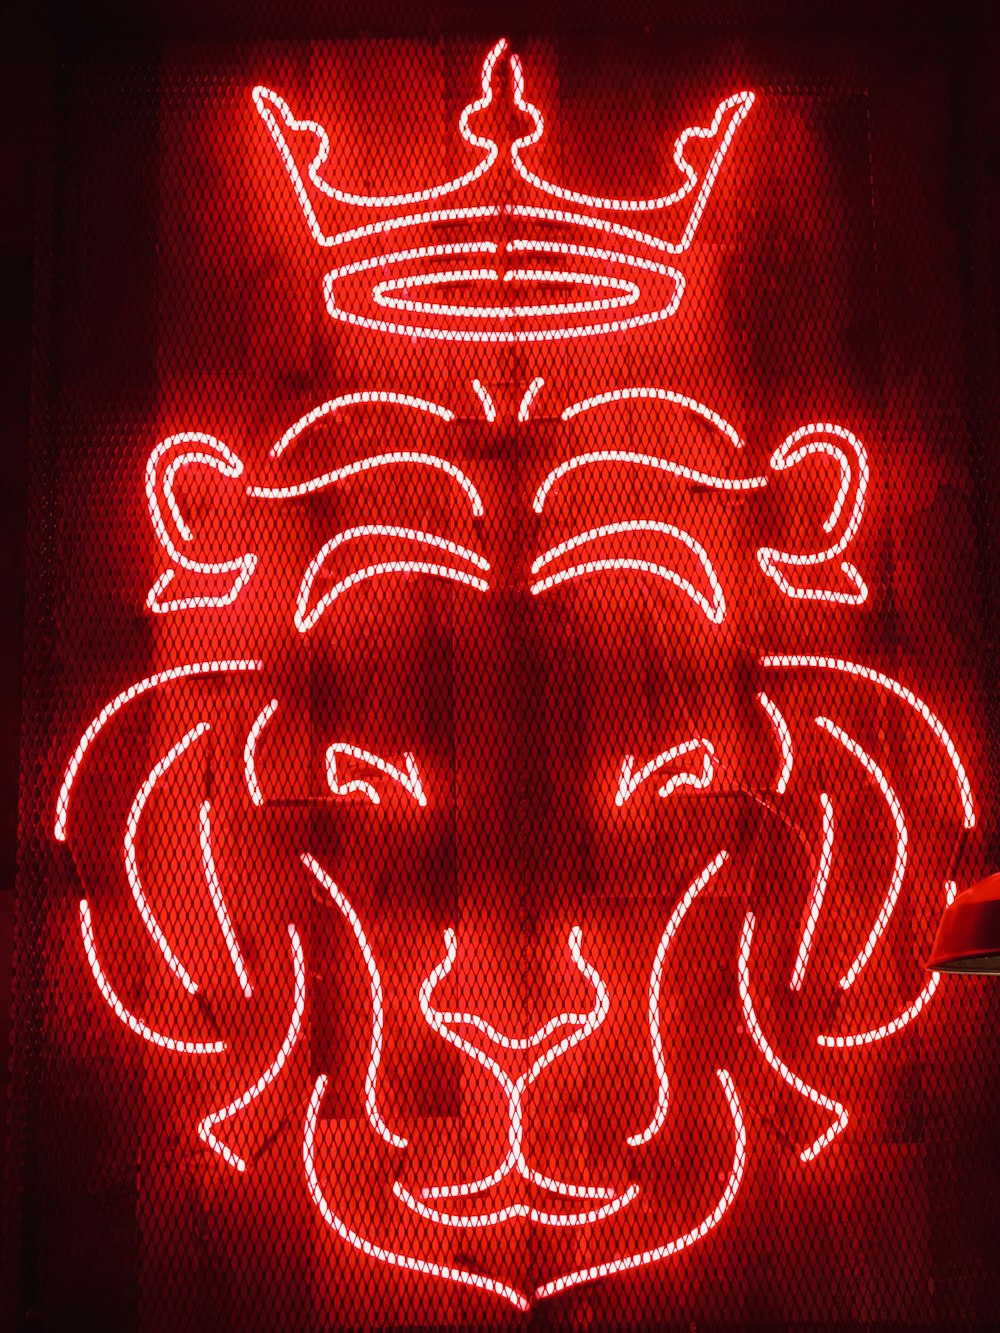 Lion neon sigange photo – Free Neon Image on Unsplash